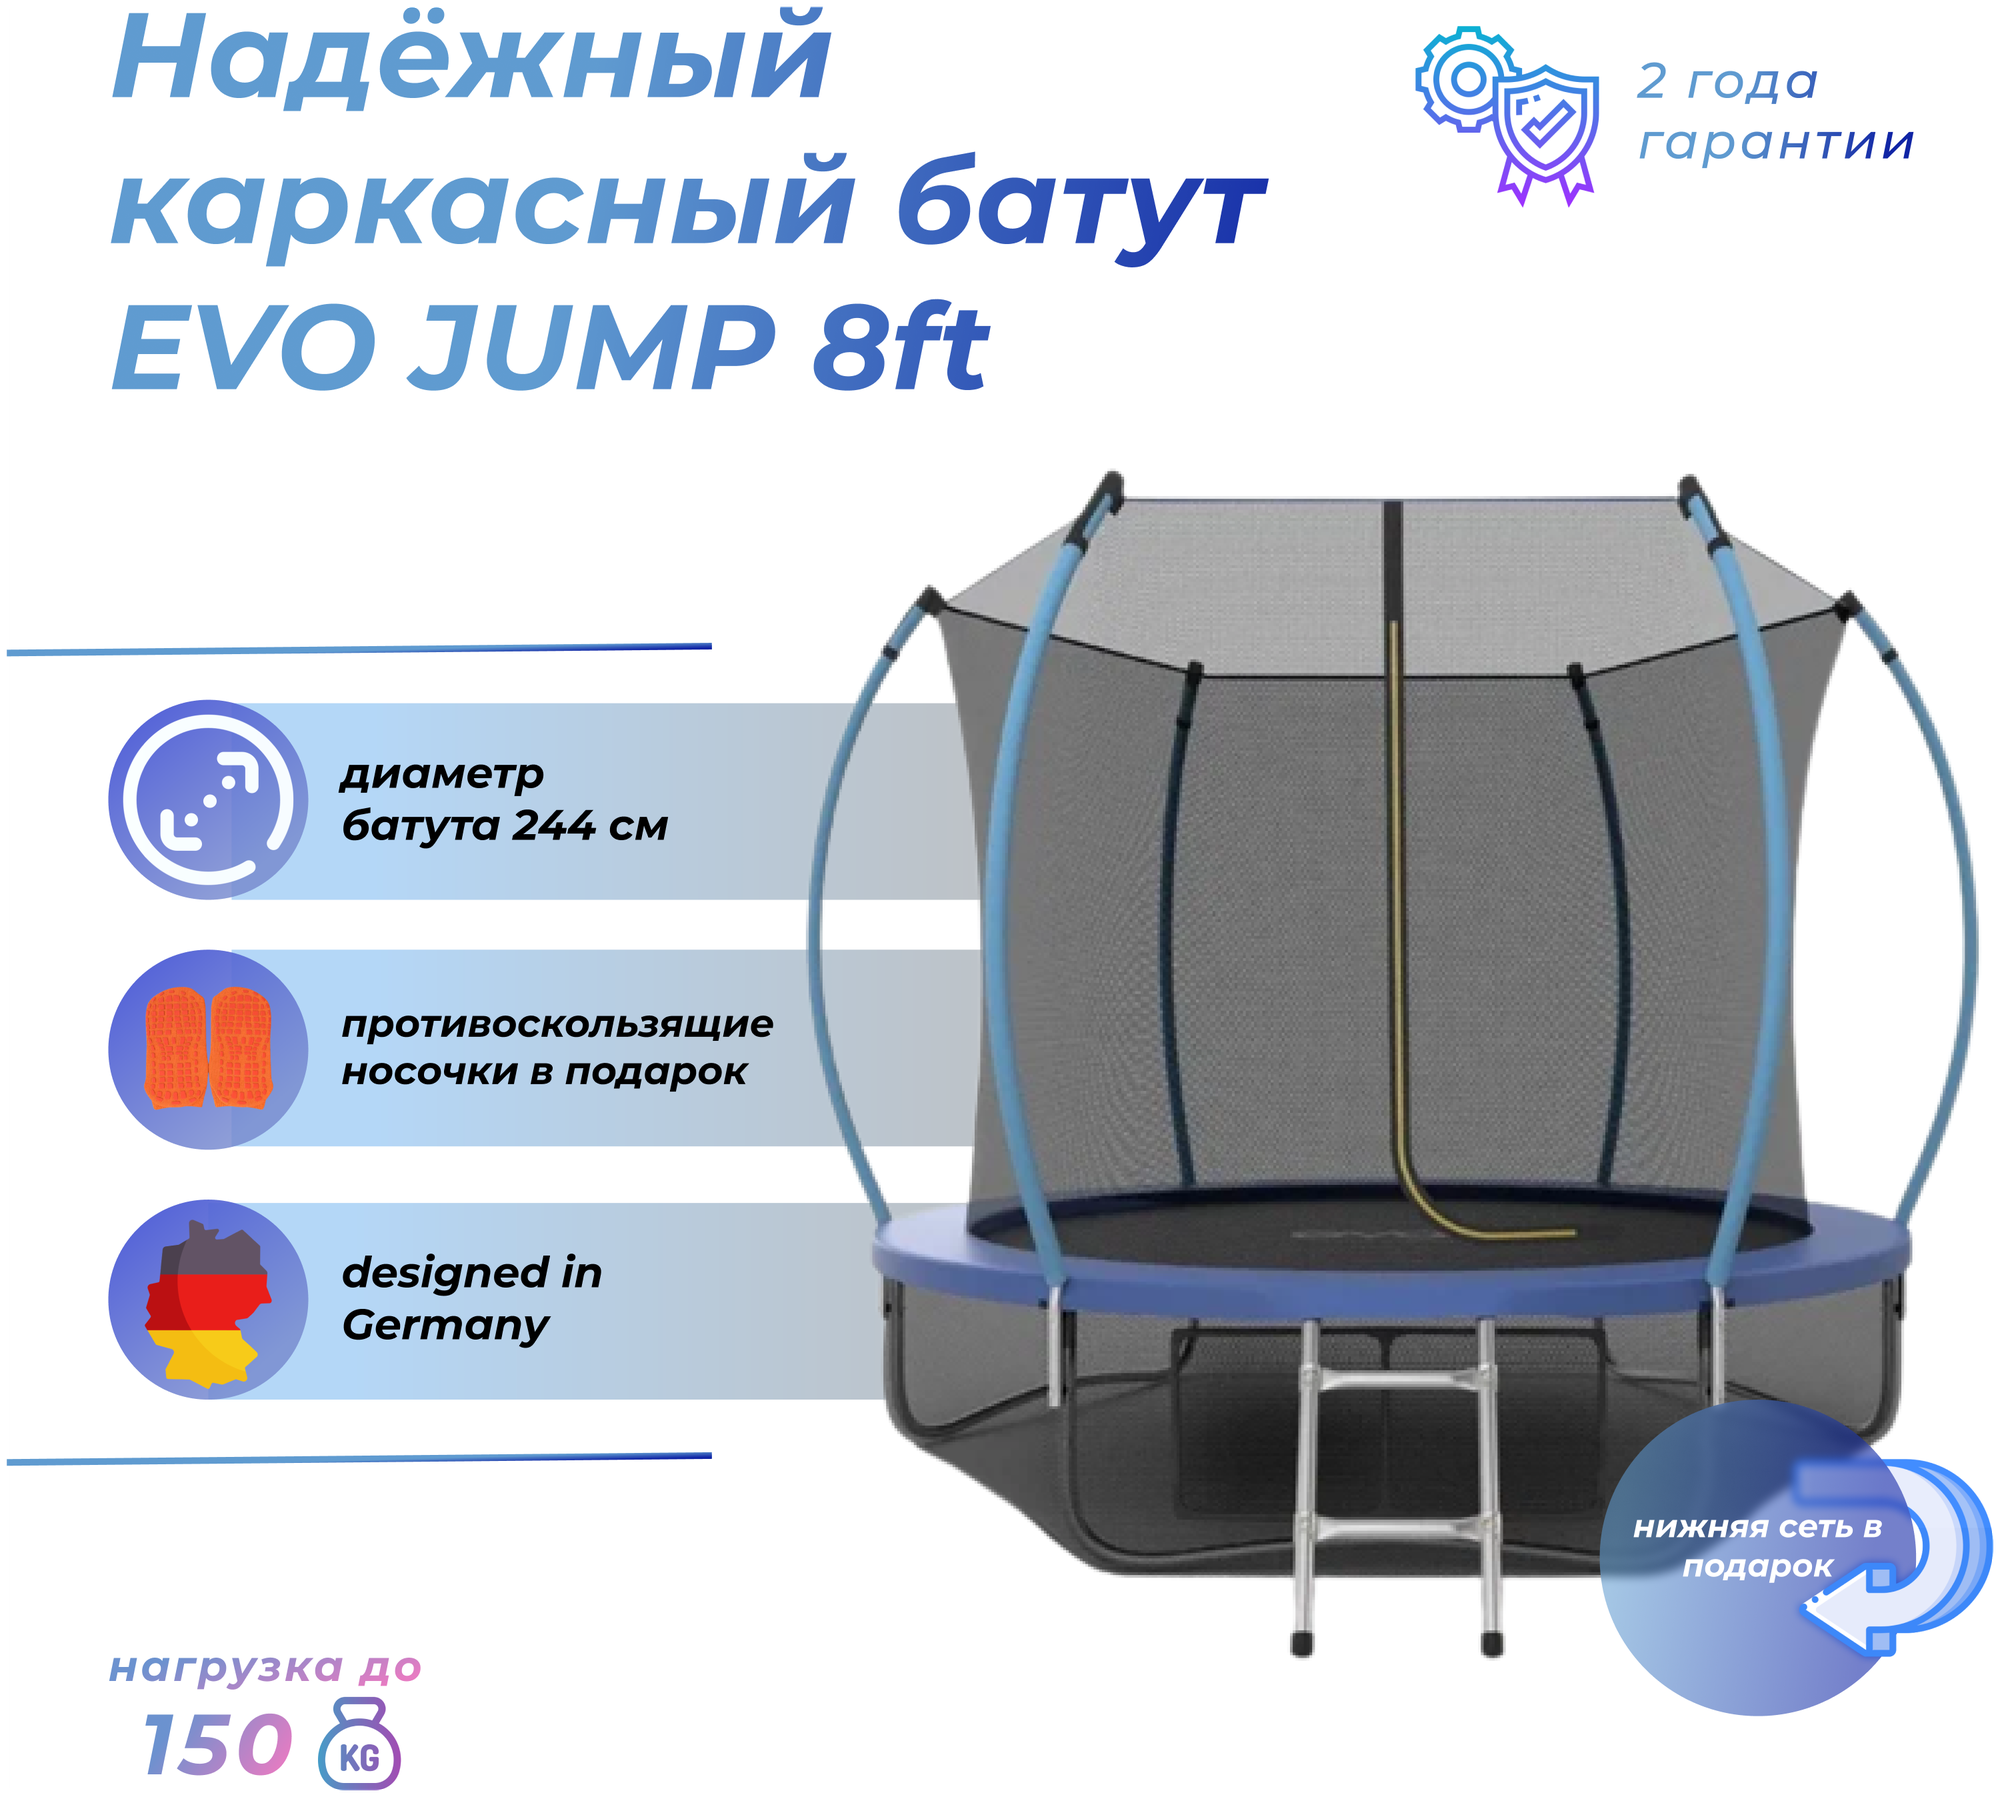  EVO JUMP Internal 8ft (Blue) c     +  